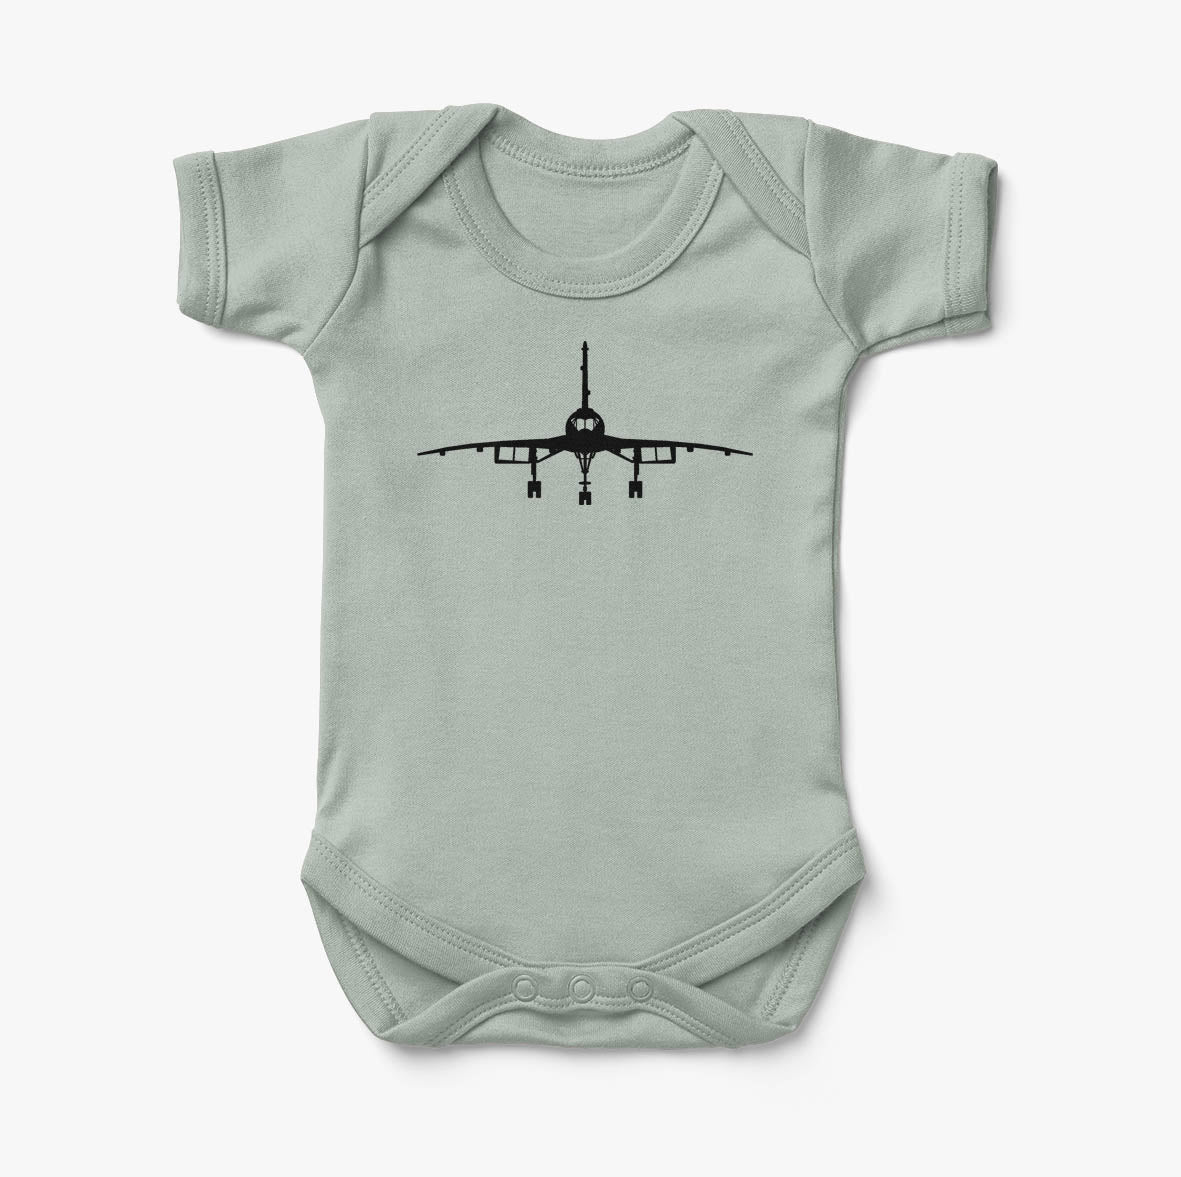 Concorde Silhouette Designed Baby Bodysuits